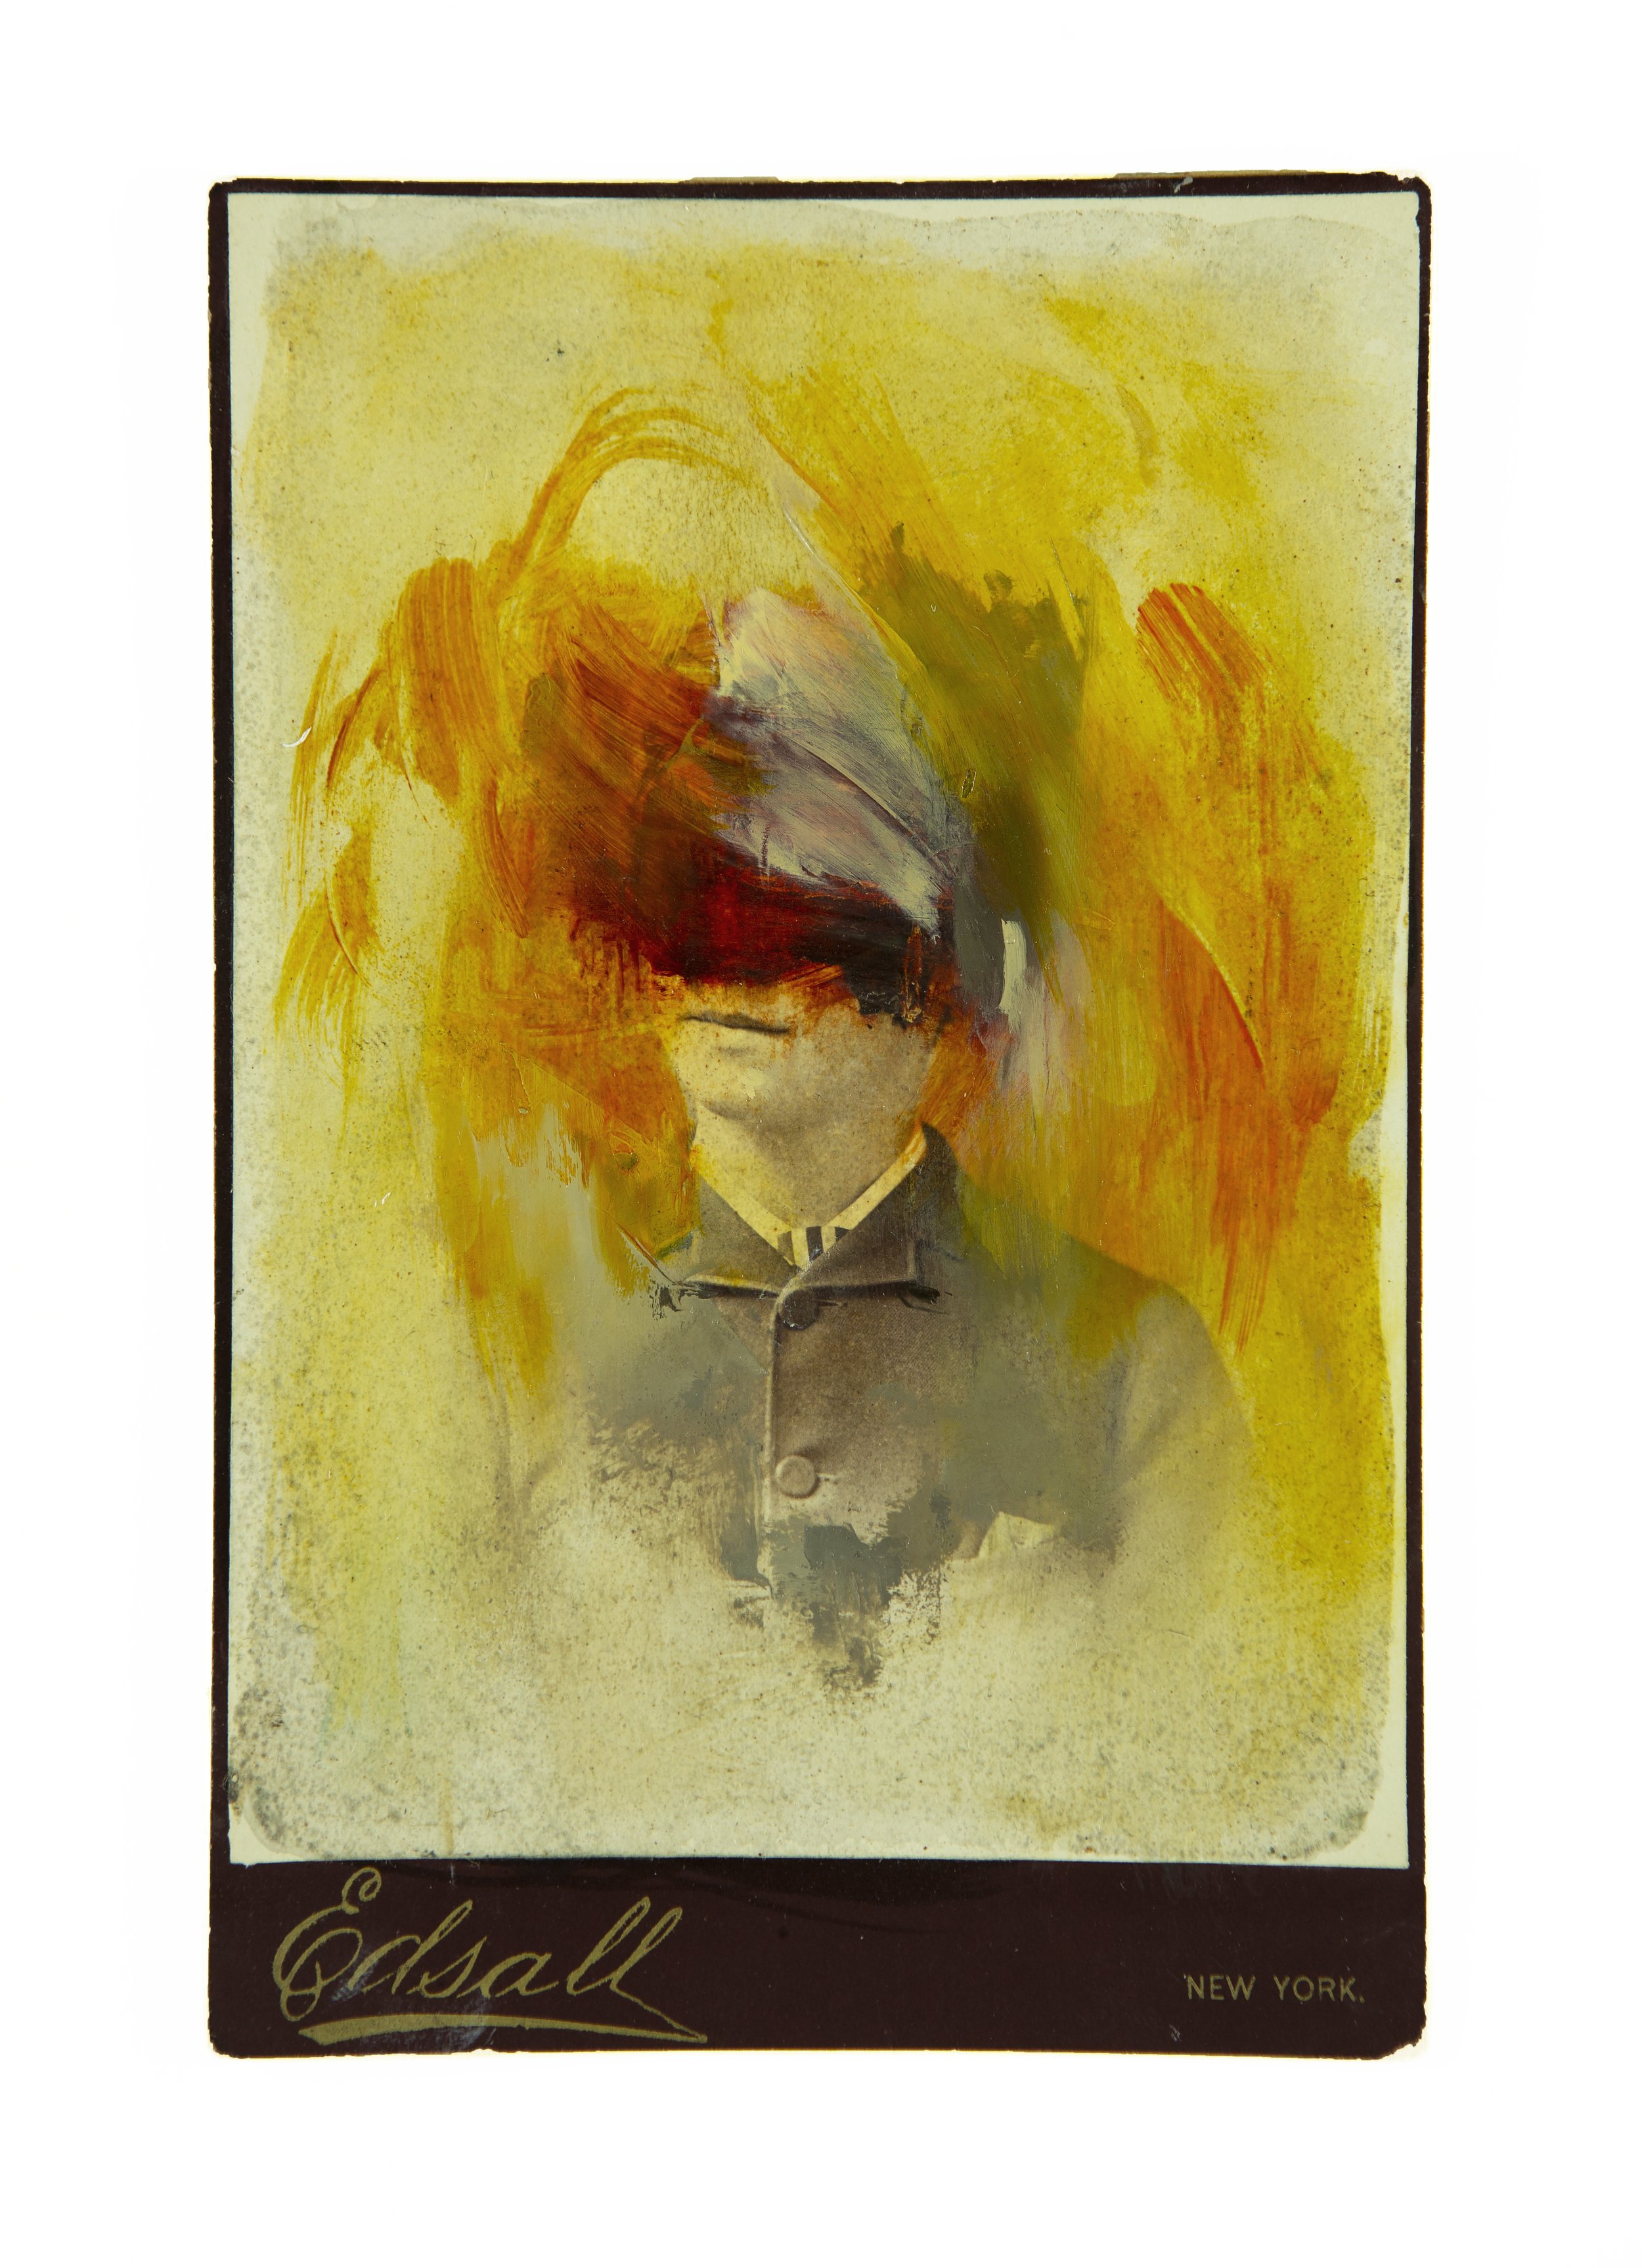 42. Suspendisse II (Edsall). 2022. Oil on vintage cabinet card. 16 x 10 cm.jpg